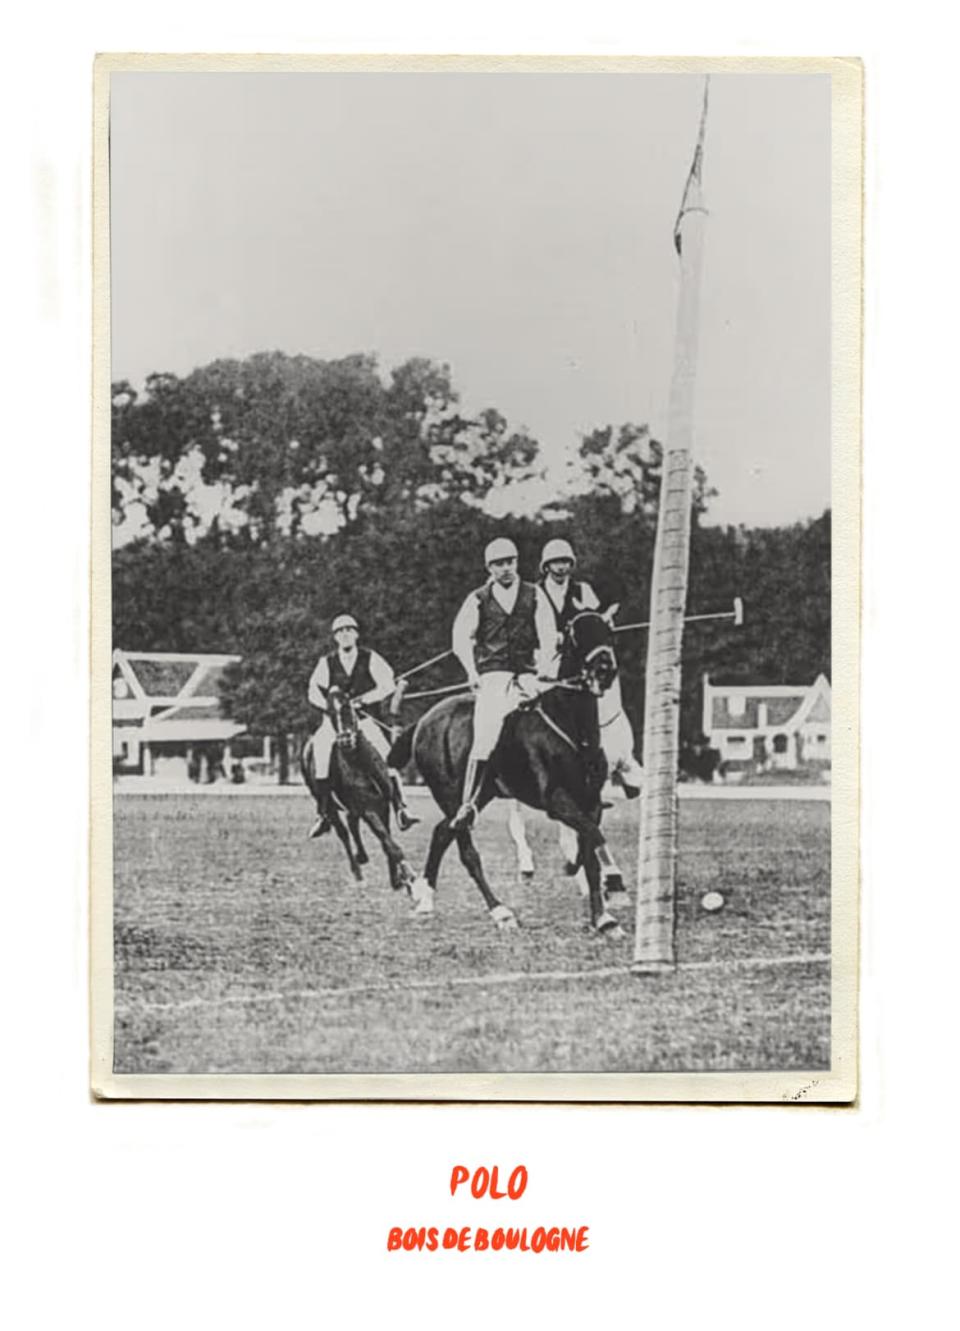 Polo at the 1900 Paris Olympics